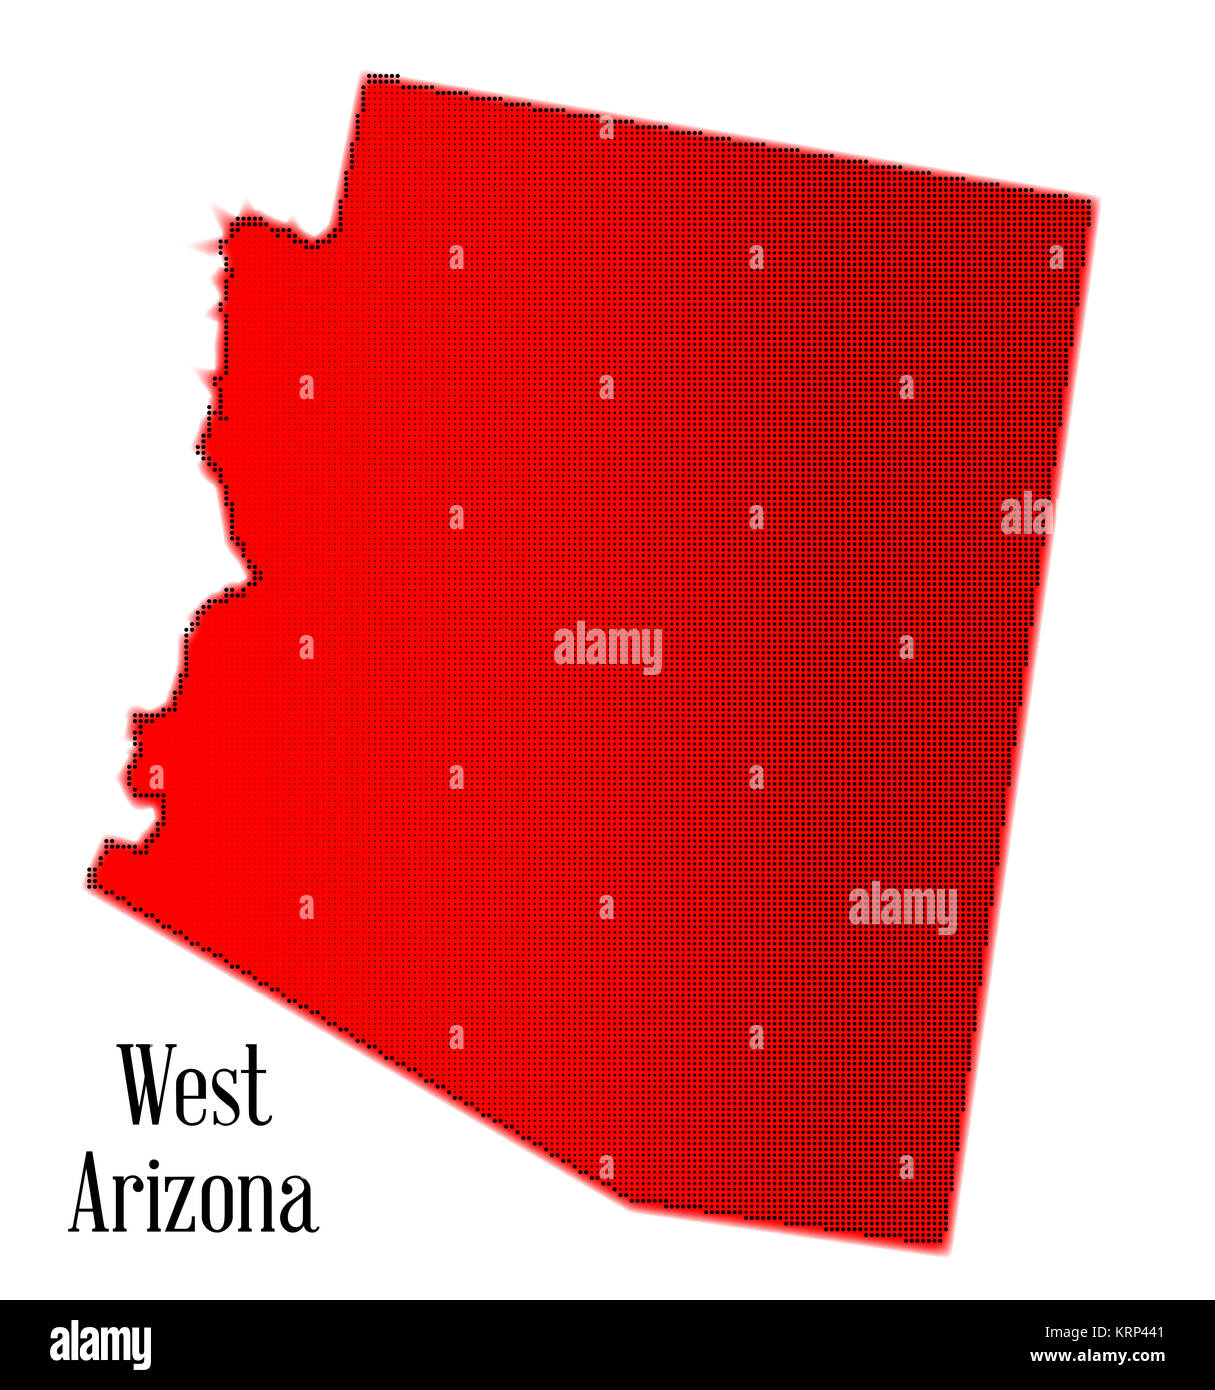 West Arizona Halftone Stock Photo